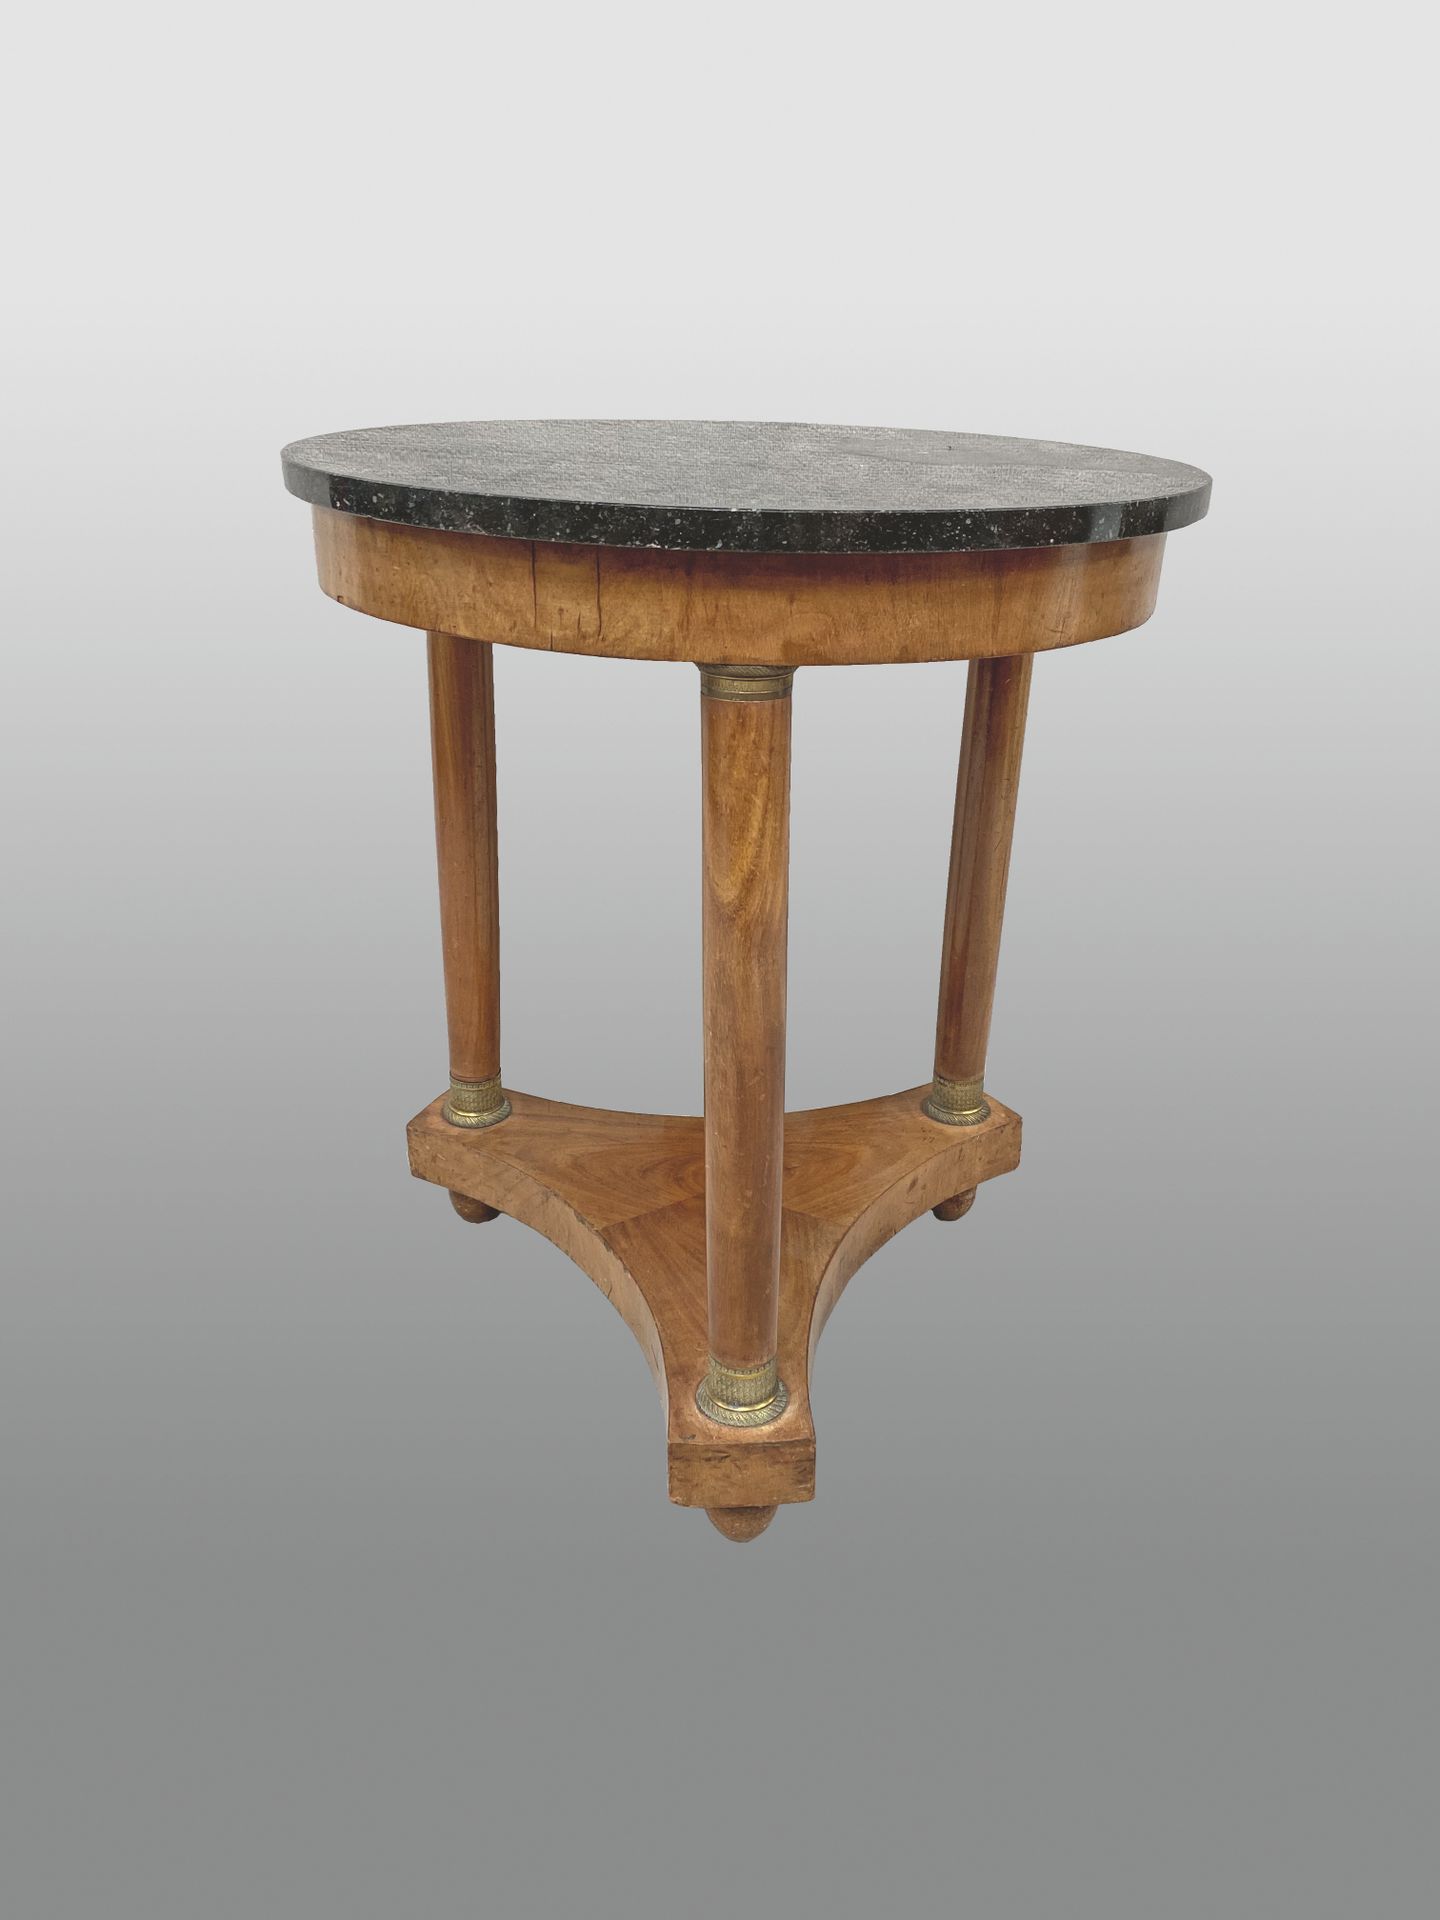 Null 圆形桃花心木和桃花心木饰面的基座桌，放在由支架连接的三根柱子上。黑色大理石顶部。

帝国时期。

高：70厘米 - 深：60厘米